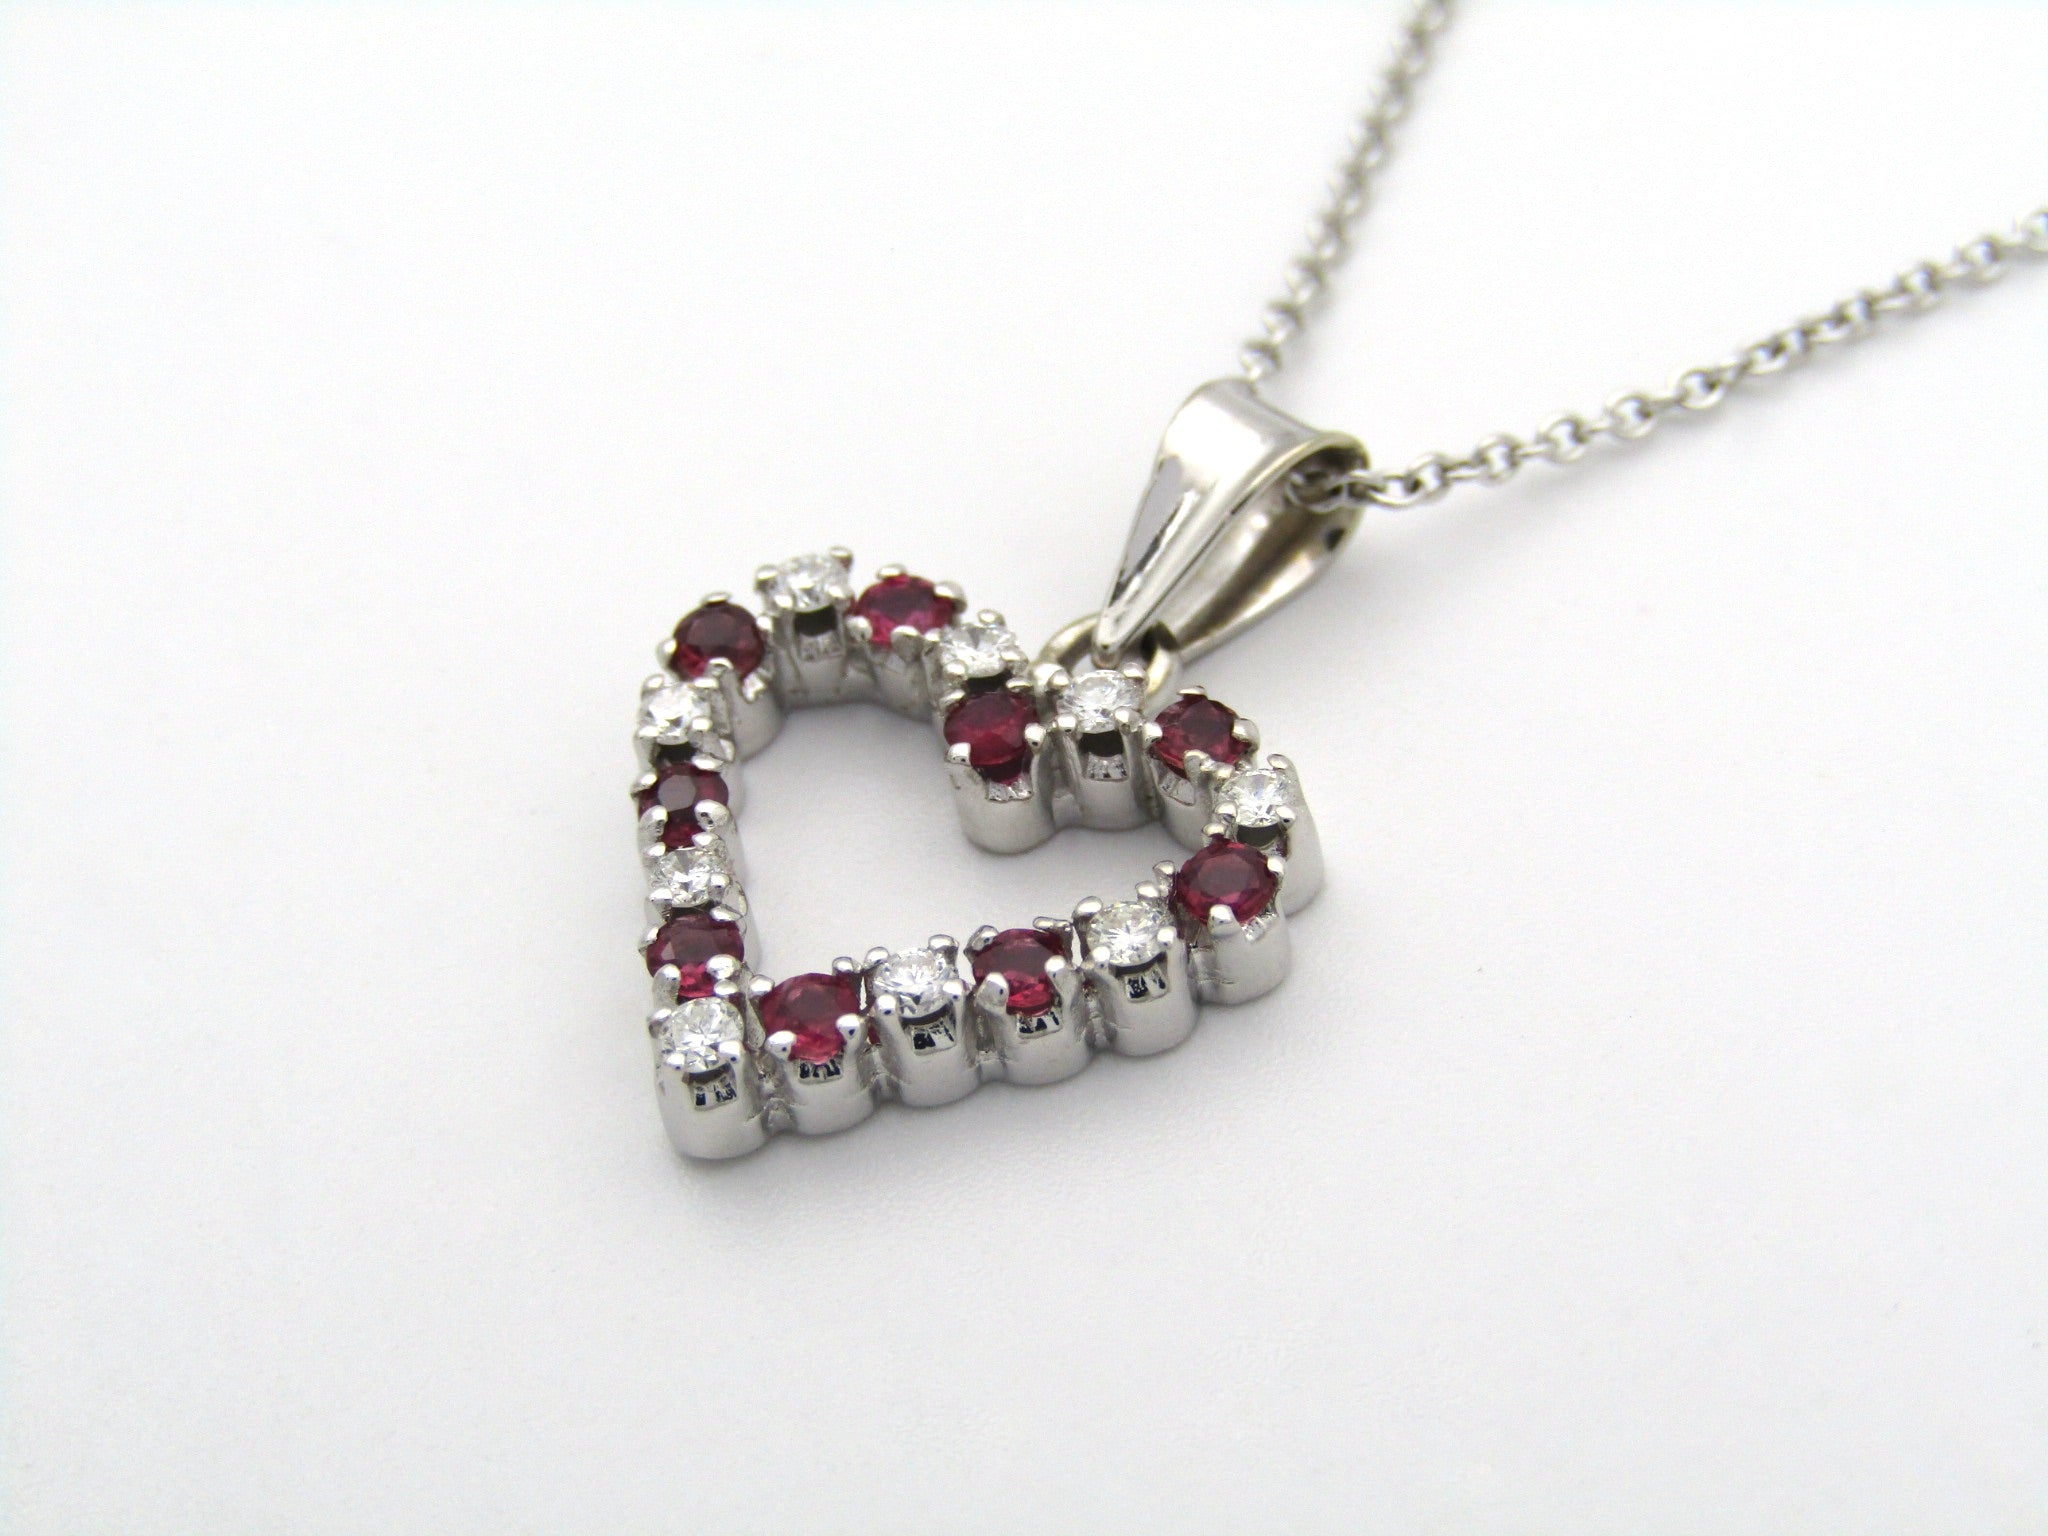 18K gold diamond and ruby heart pendant.